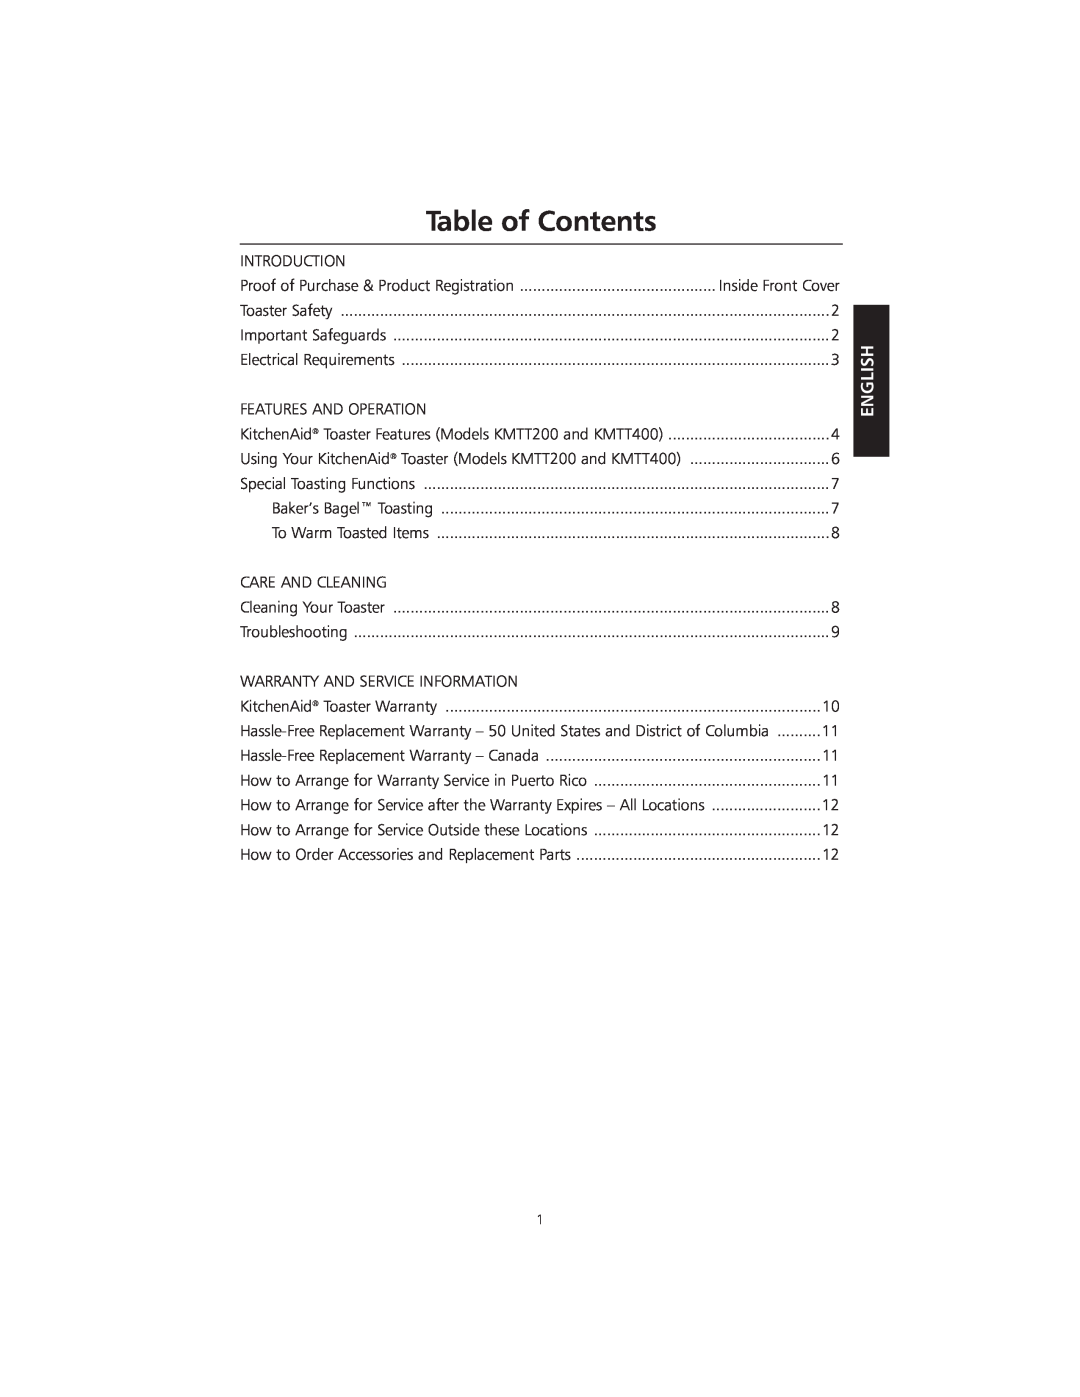 KitchenAid KMTT400 manual Table of Contents, English 